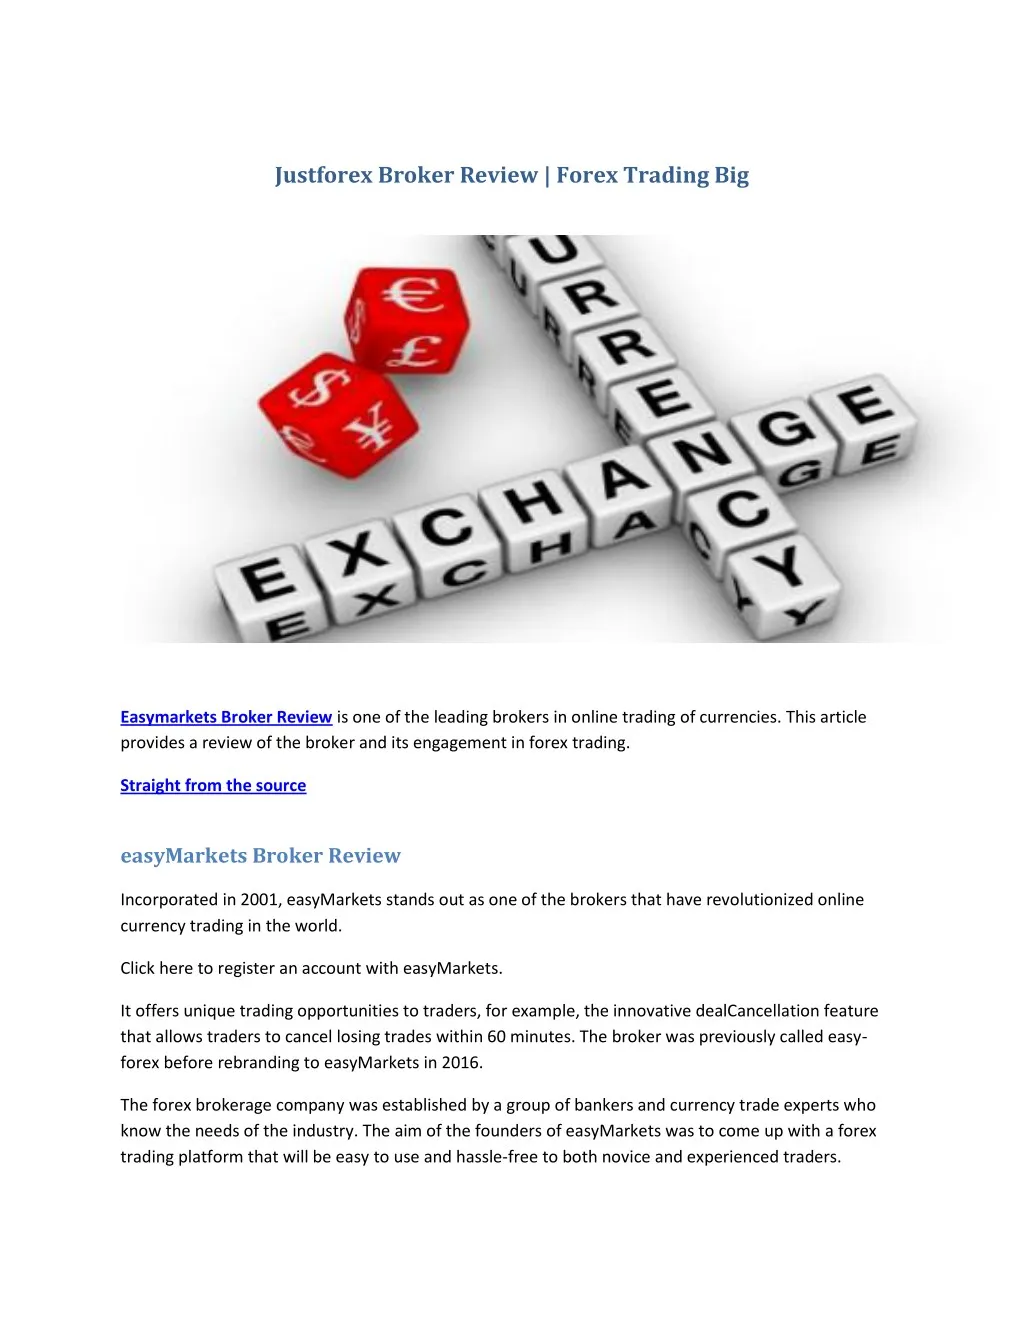 forex trading broker online